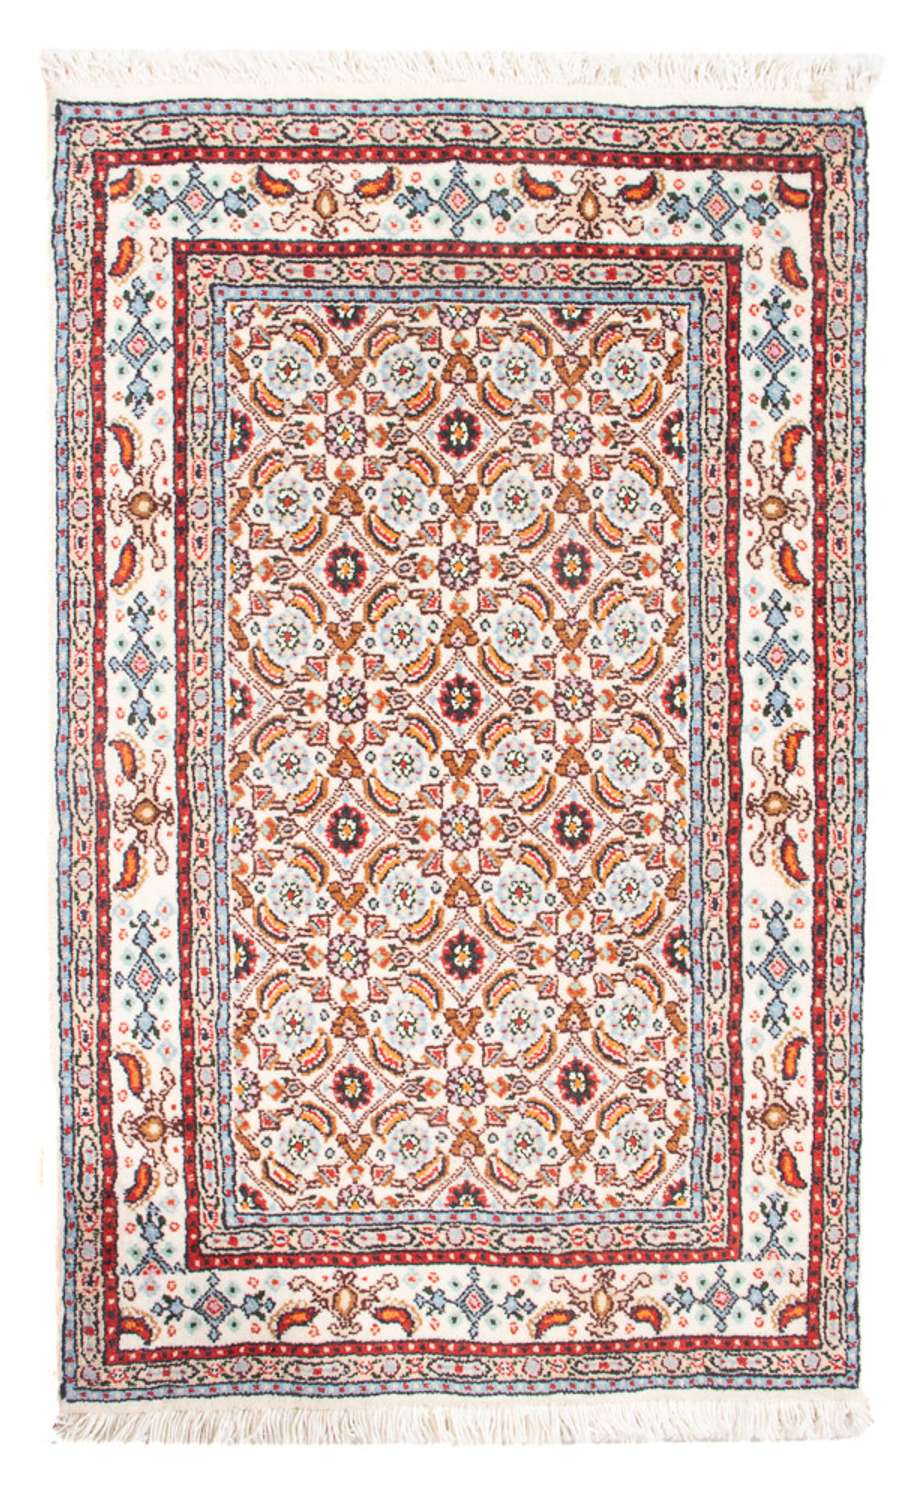 Persisk matta - Classic - Kungliga - 90 x 60 cm - flerfärgad